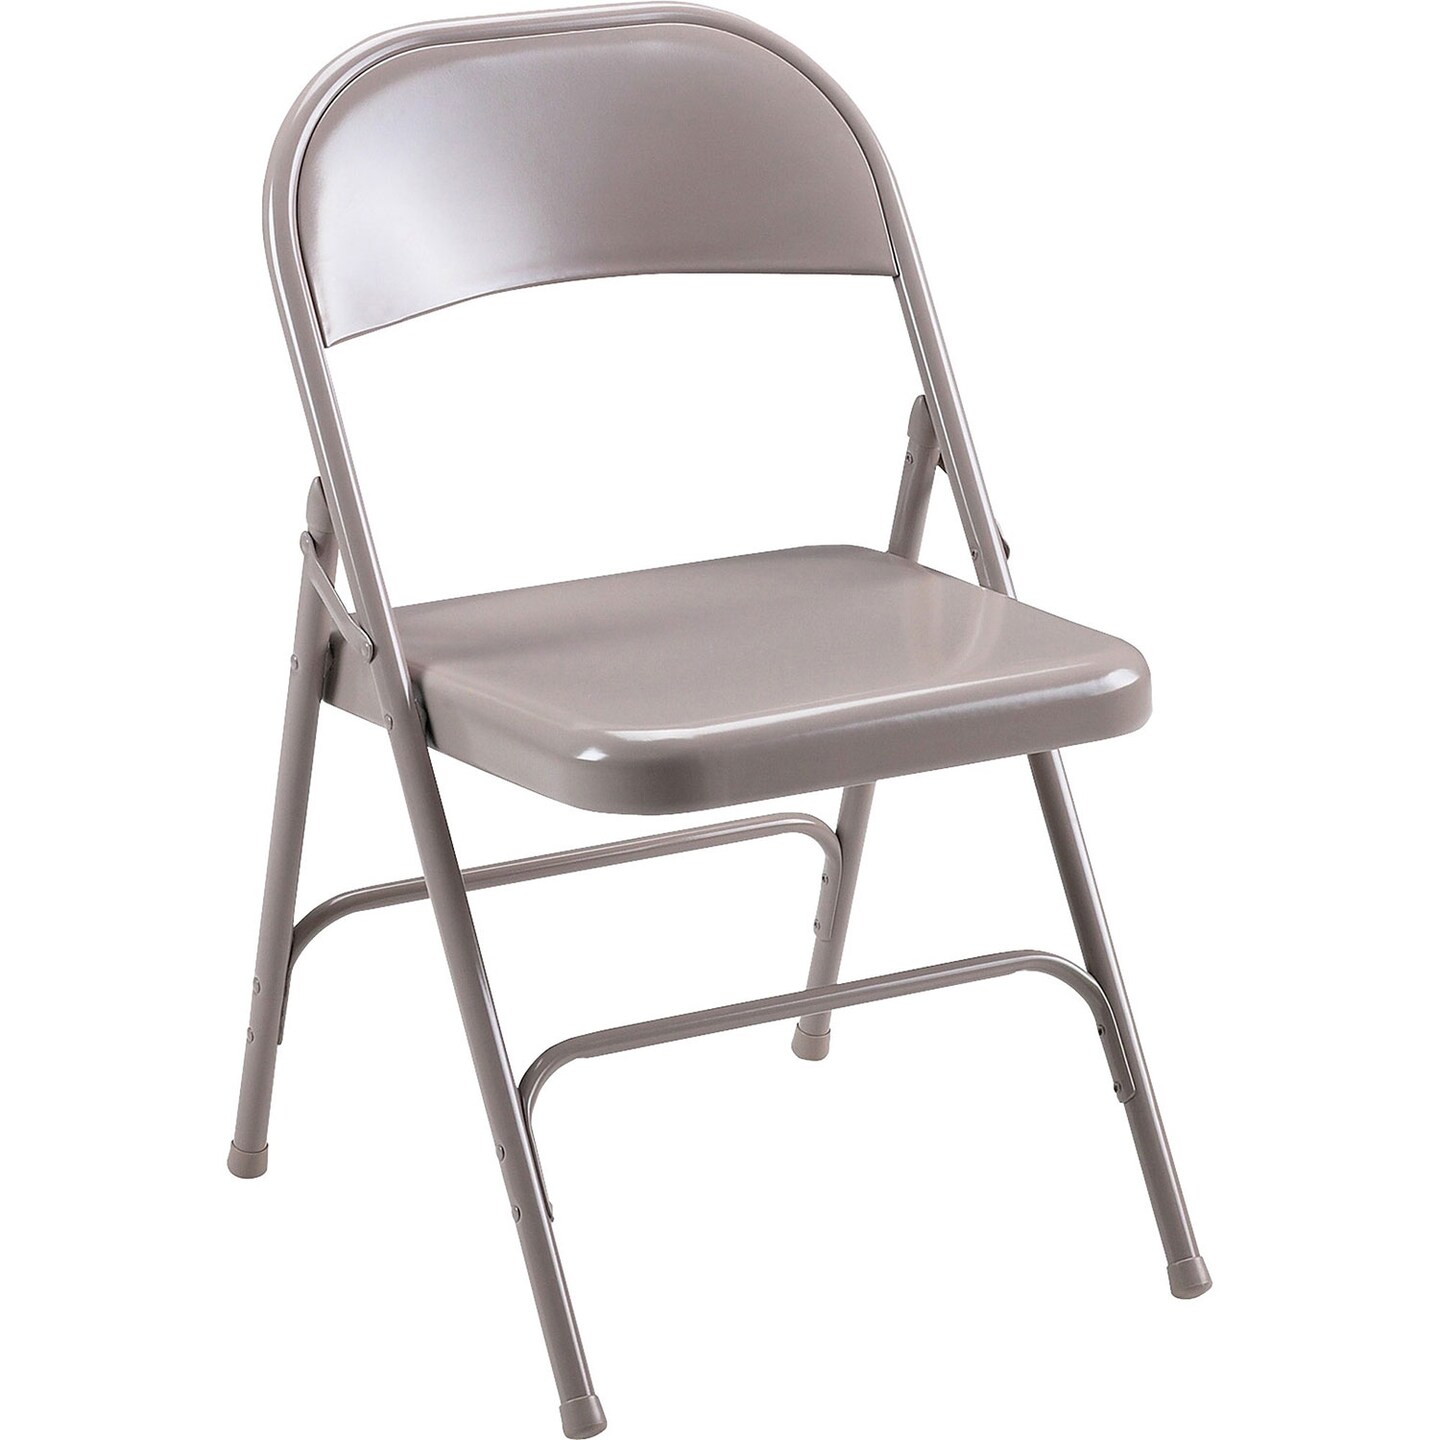 Lorell Folding Chairs, Steel Seat, 19-3/8&#x26;quot; x 18-1/4&#x26;quot; x 29-5/8&#x26;quot;, Beige